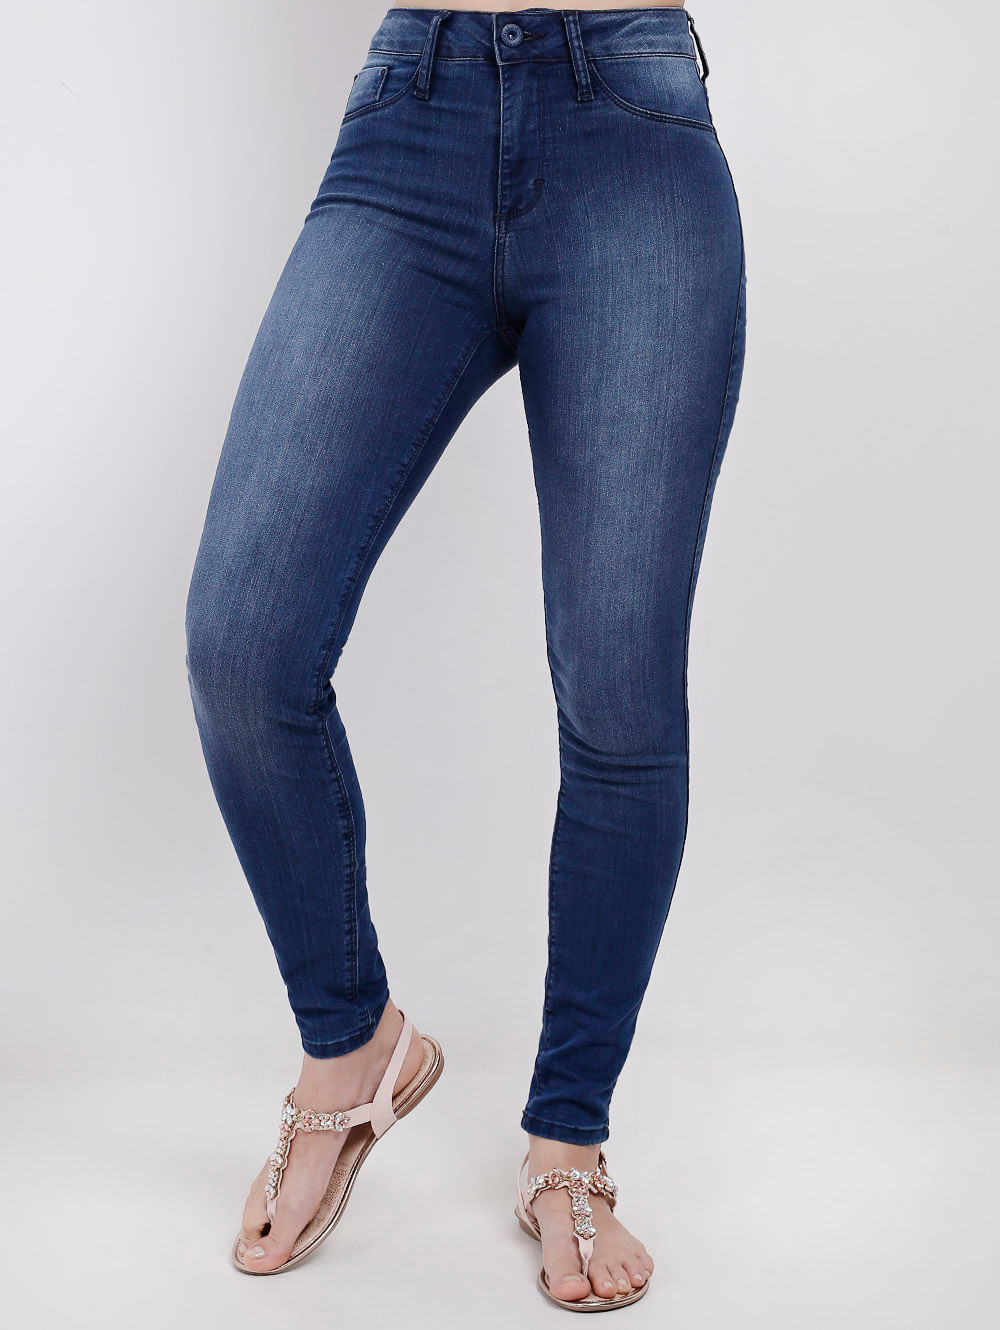 calça jeans feminina lunender